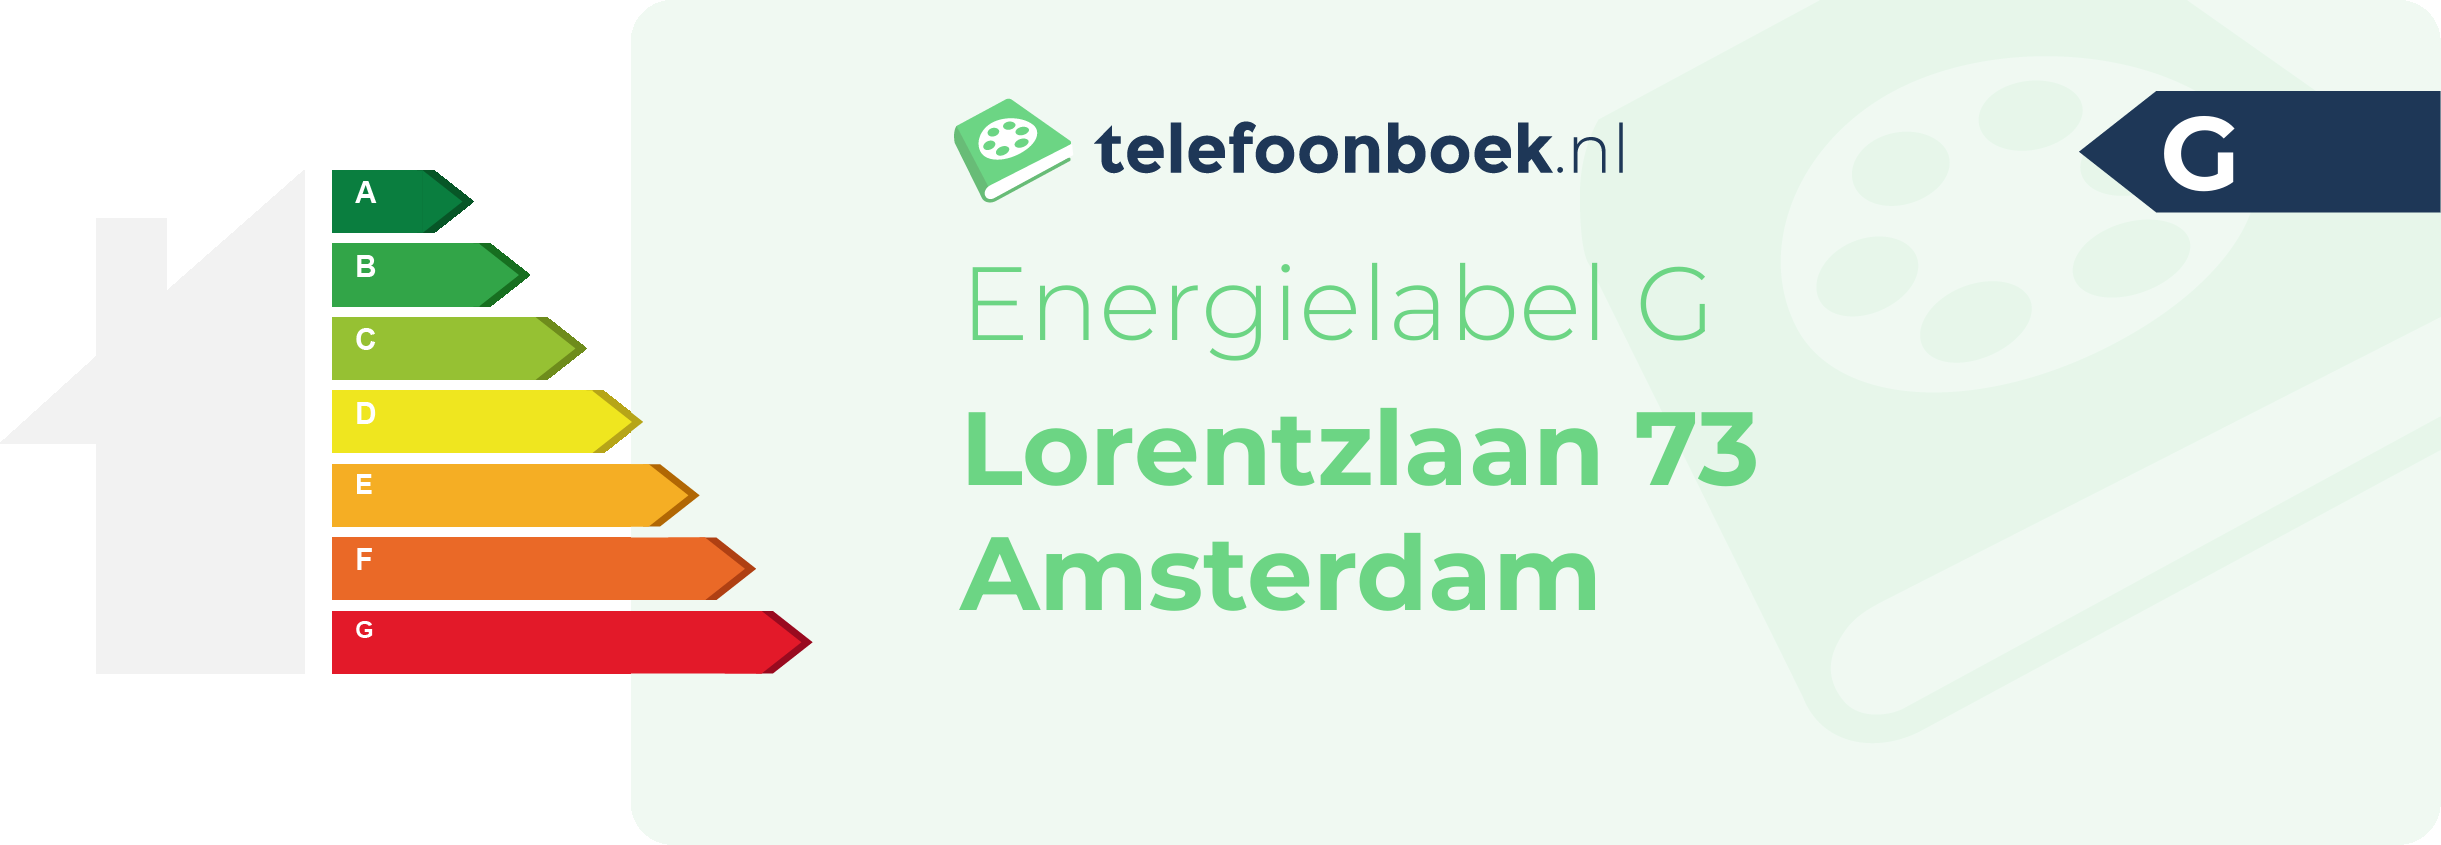 Energielabel Lorentzlaan 73 Amsterdam